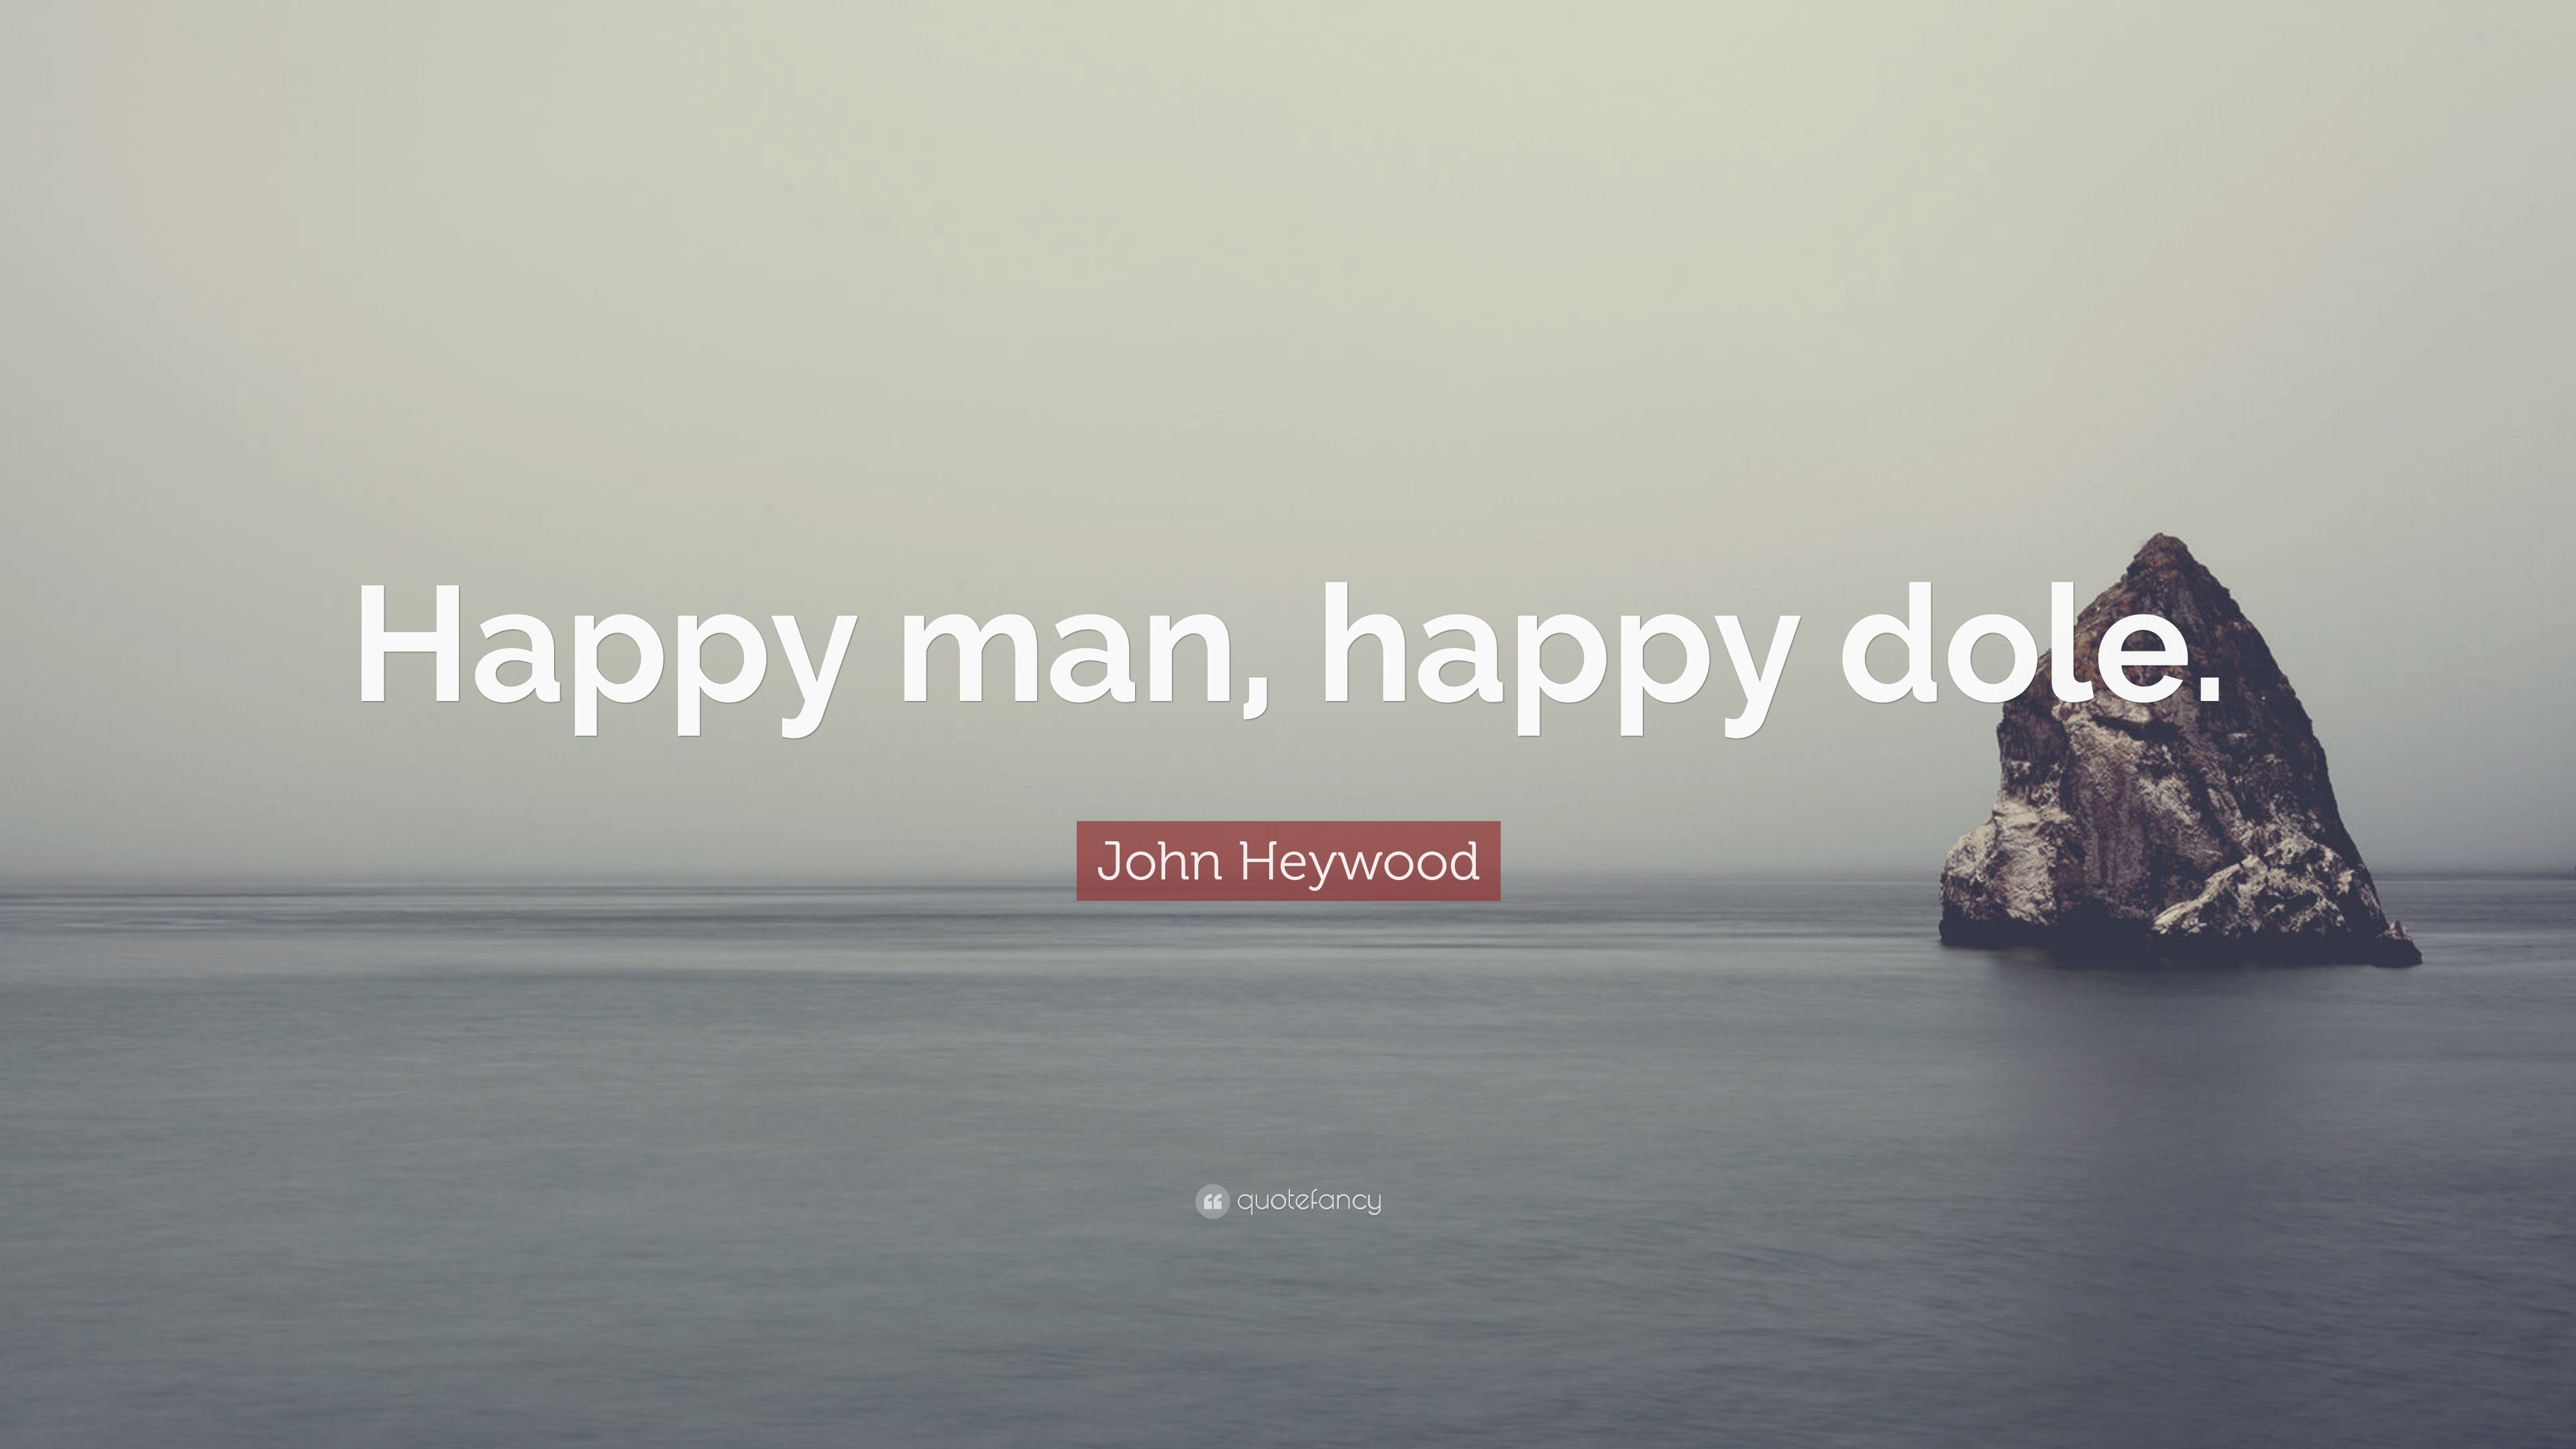 John Heywood Quote: “Happy man, happy dole.” 7 wallpaper